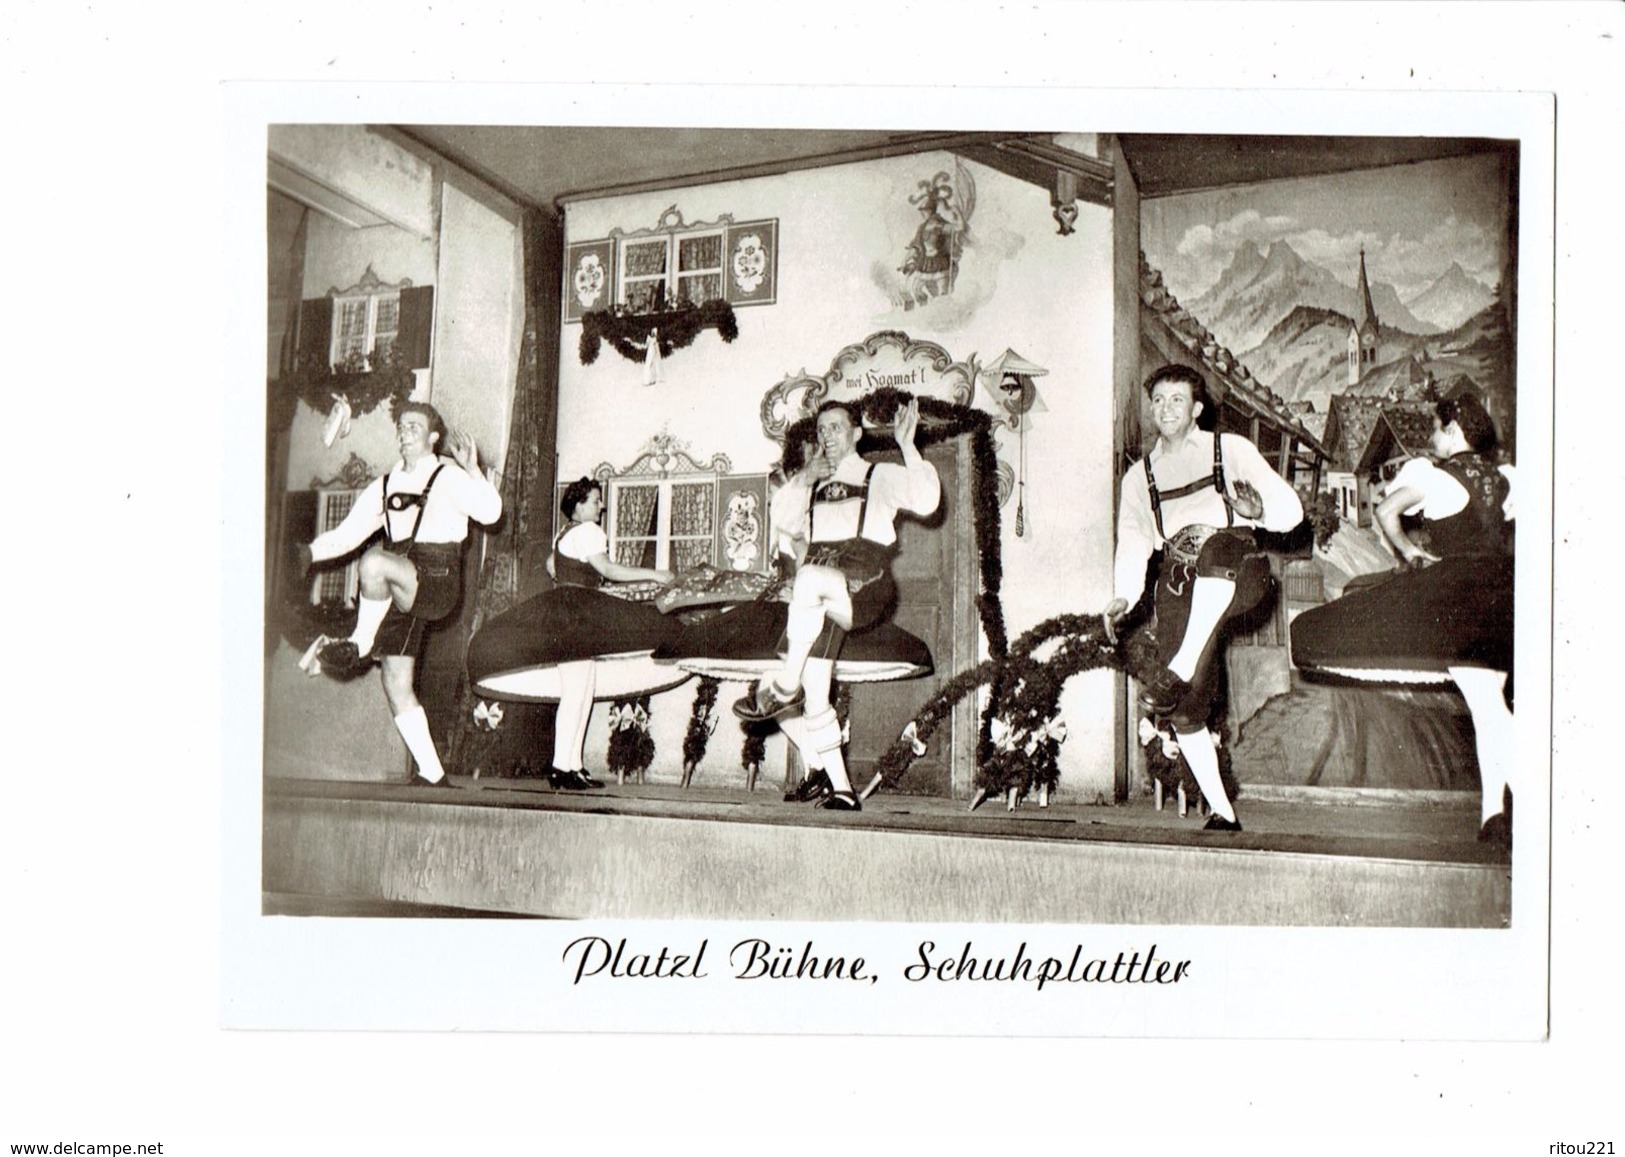 Lot 2 Cpm - PLATZL BÜHNE SCHUHPLATTLER / TRACHTENTANZ - Folklore Danse Robe à Volant Cloche Dessin Mural - Dances